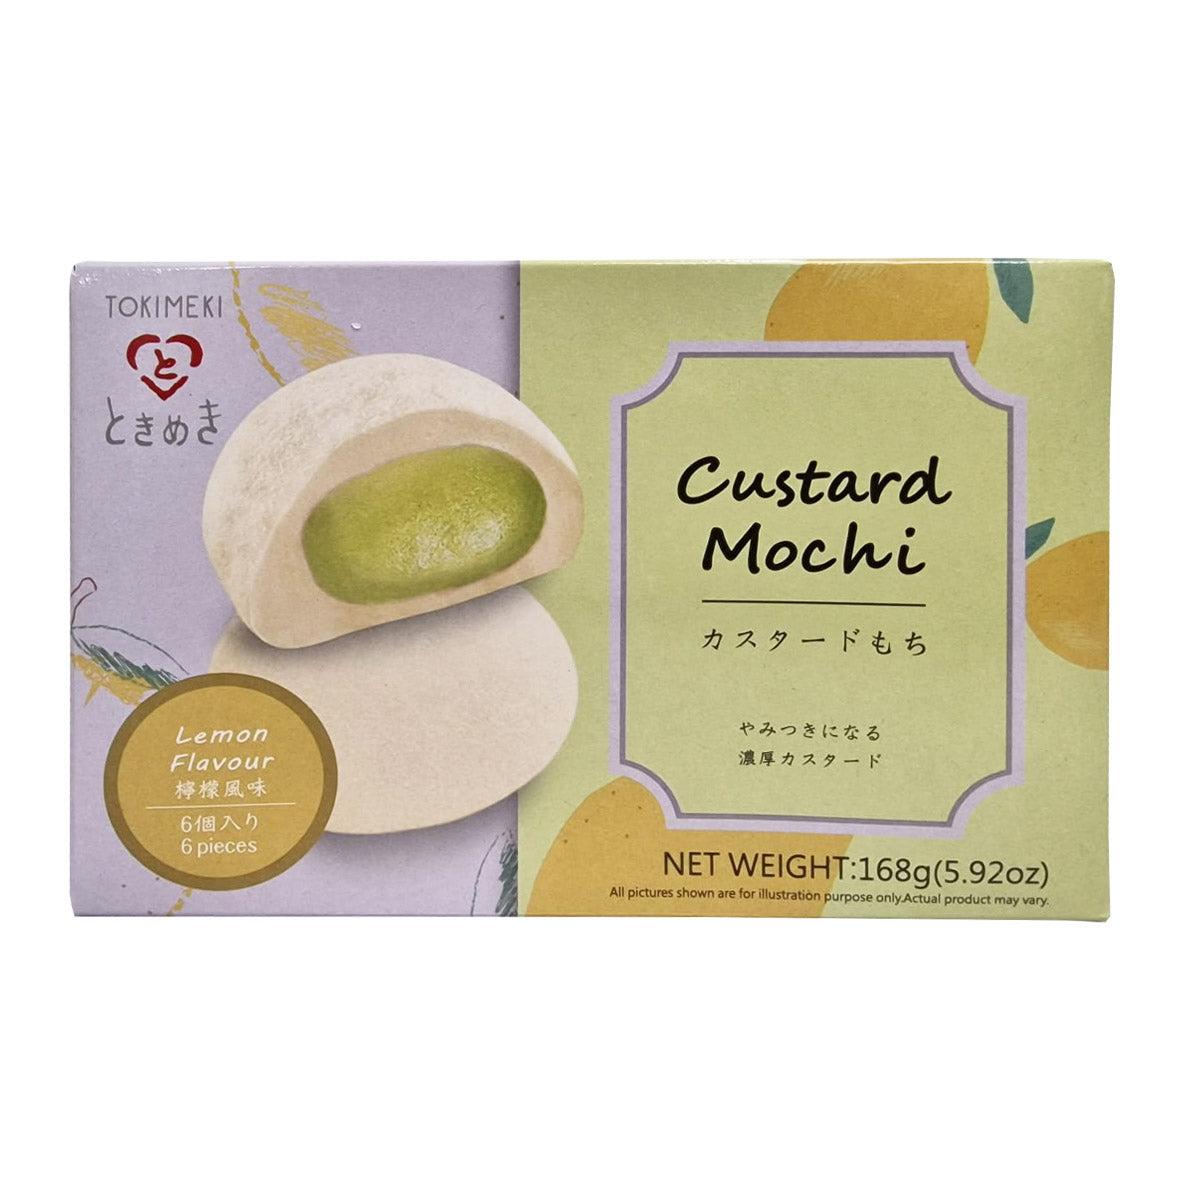 Custard Mochi - Lemon Flavour